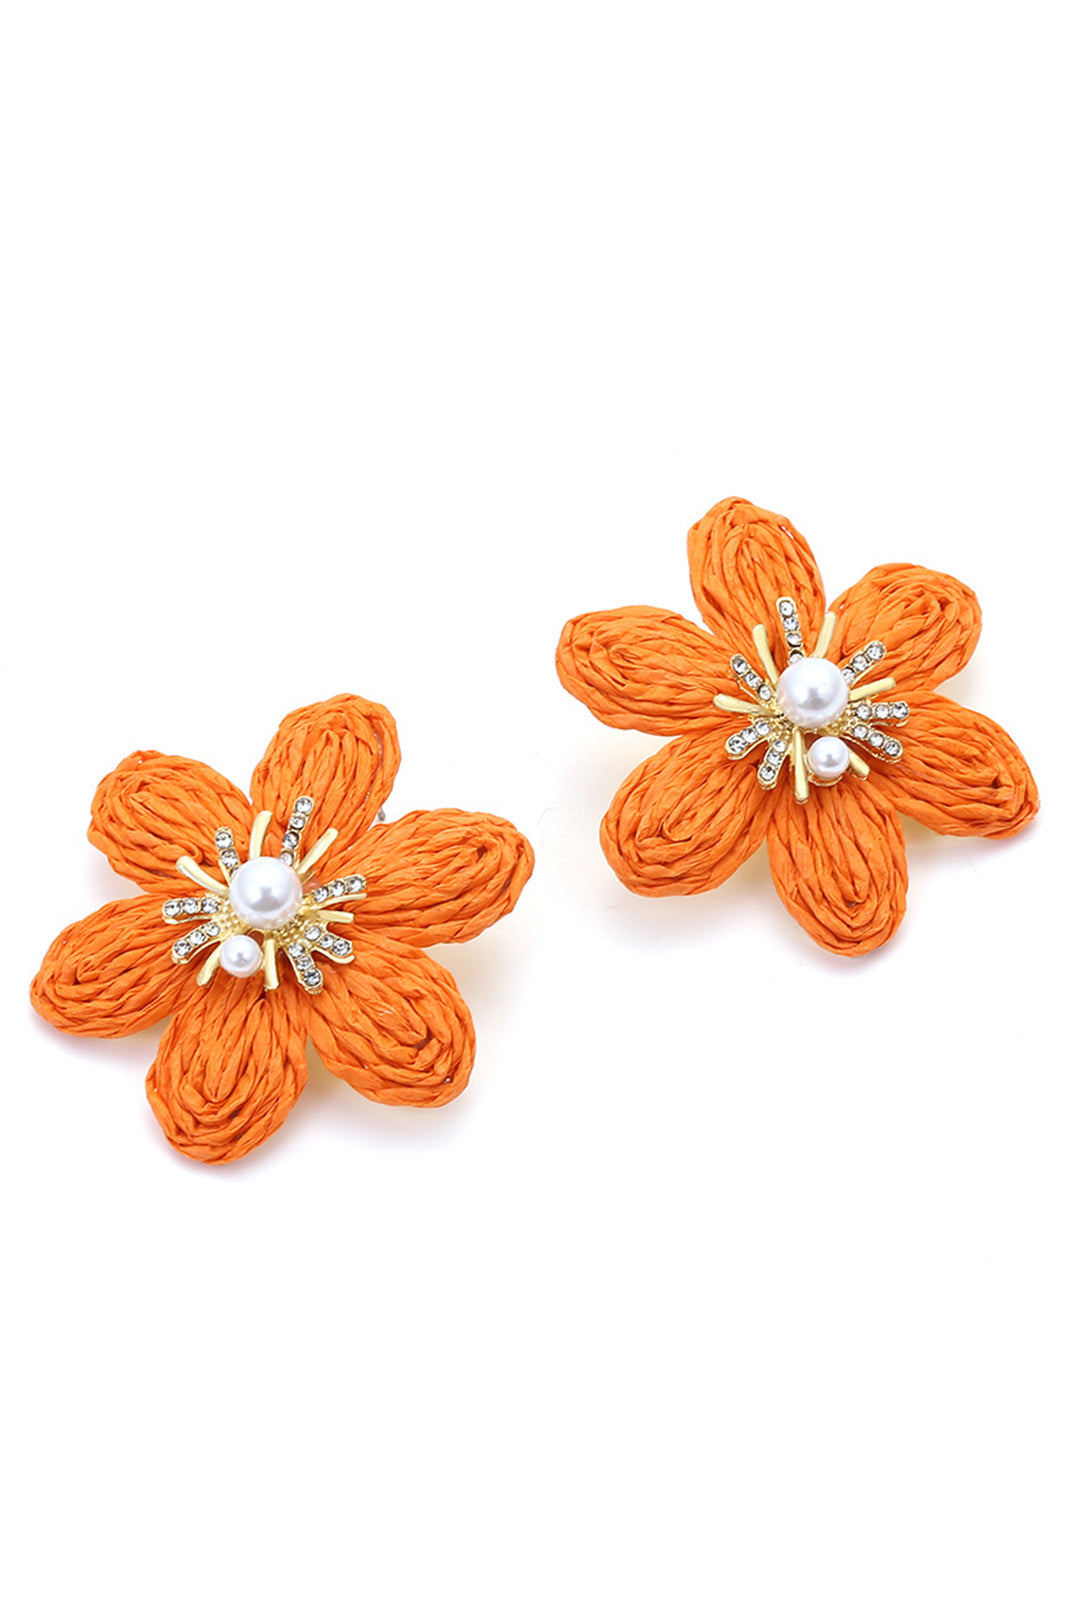 Pearl And Rhinestone Flower Earrings